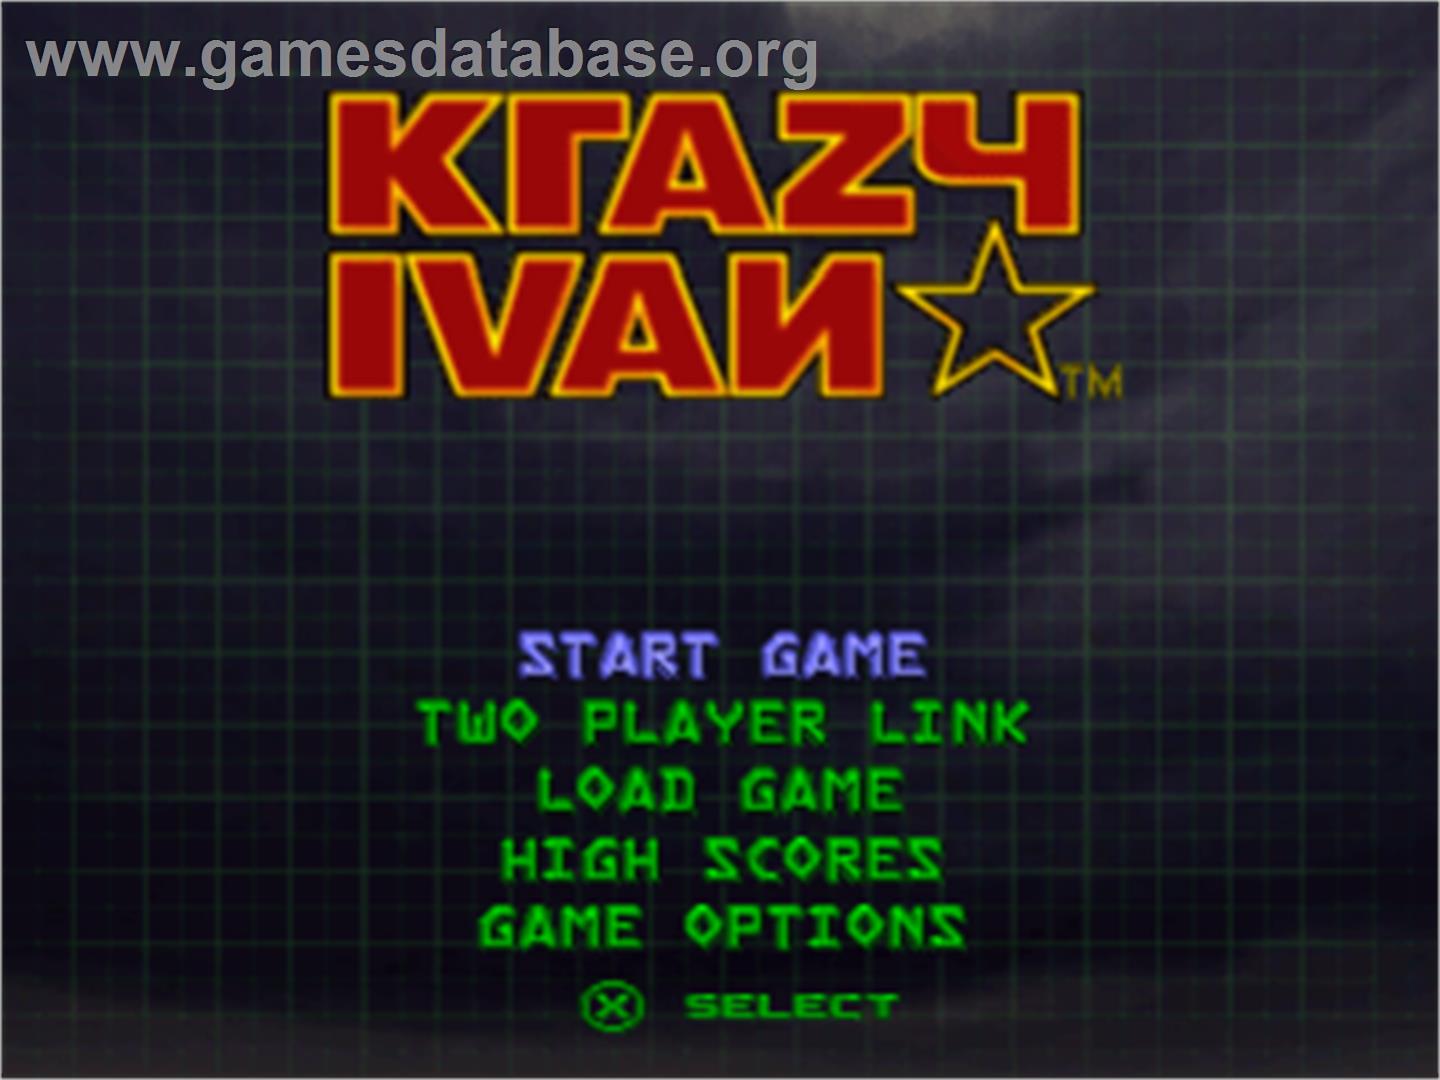 Krazy Ivan - Sony Playstation - Artwork - Title Screen